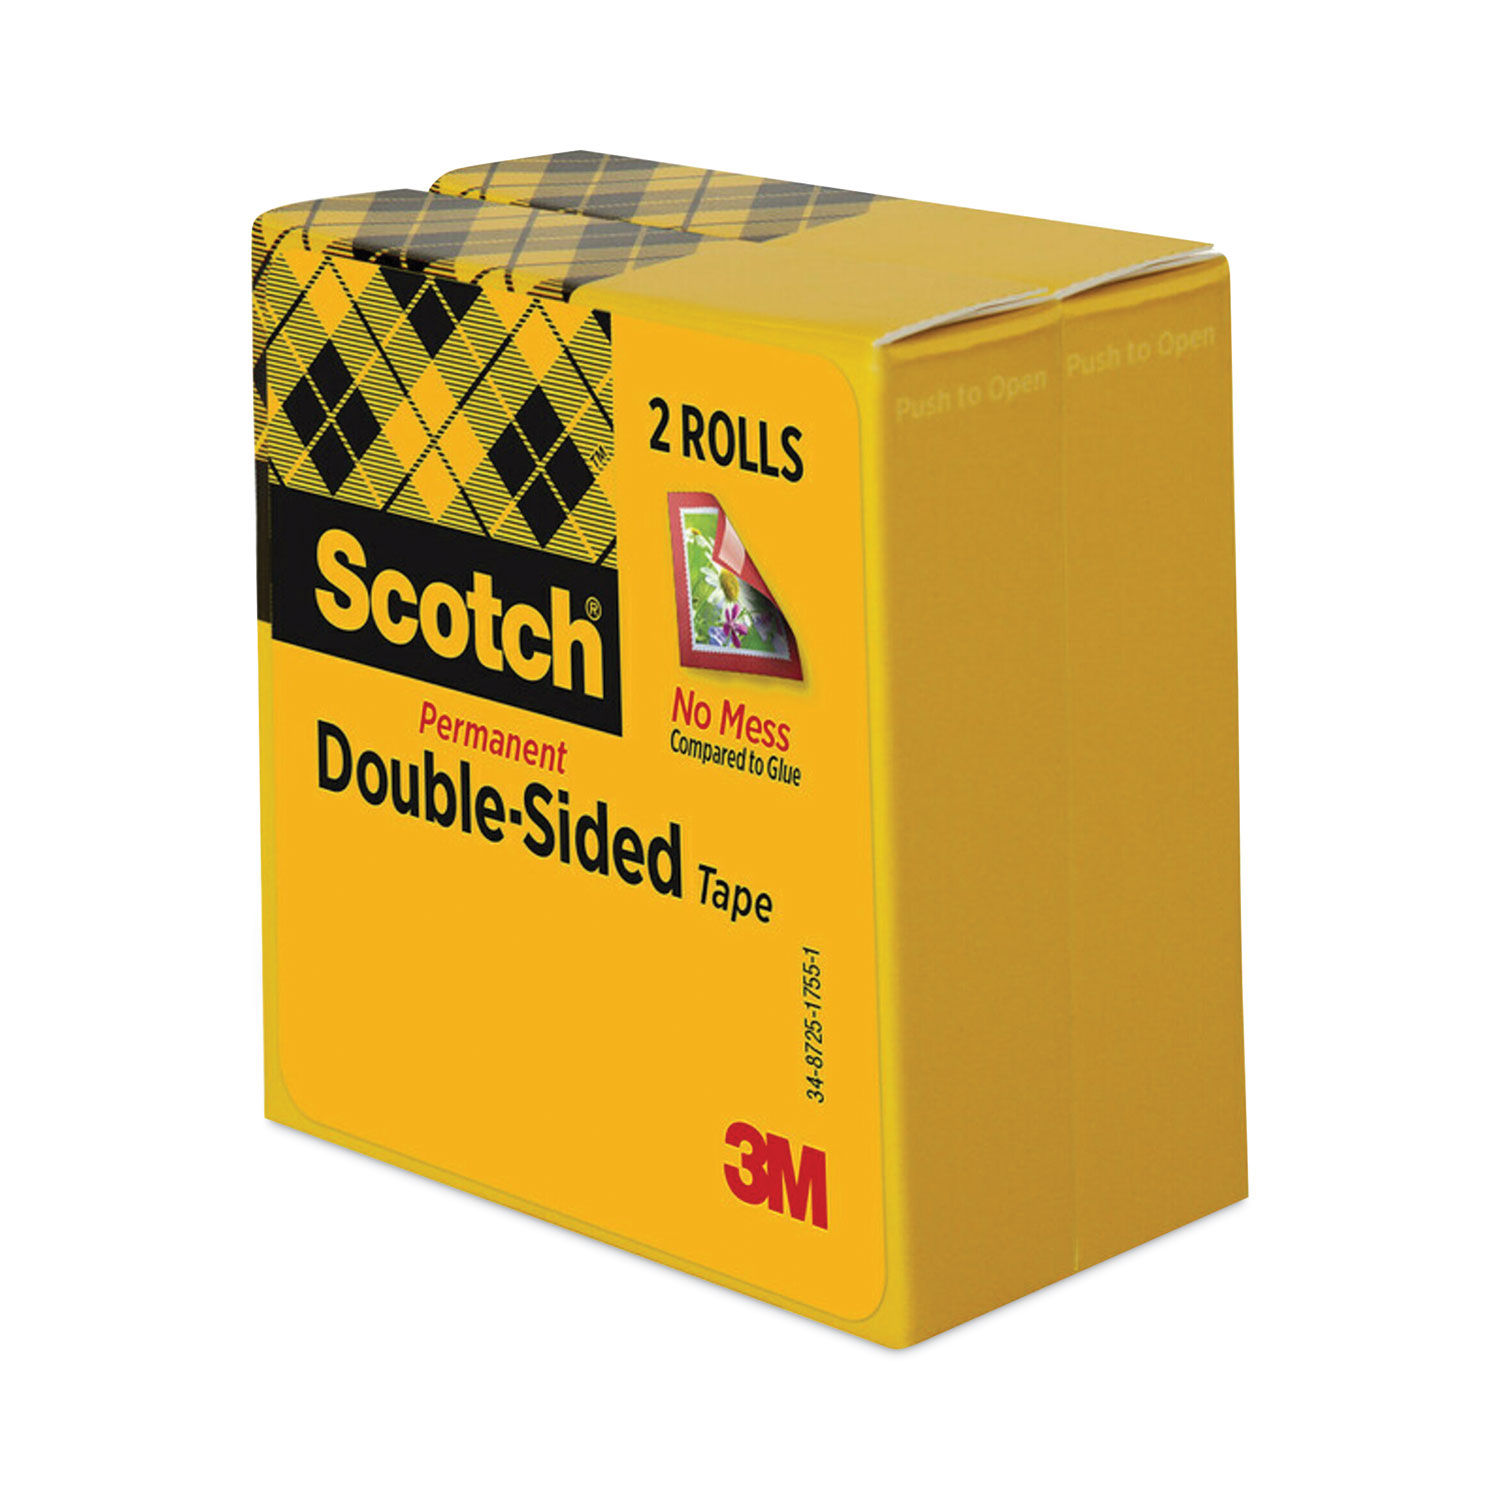 Scotch-brite Scotch Permanent Double-Sided Tape - 1/2W - MMM6656PKC40 